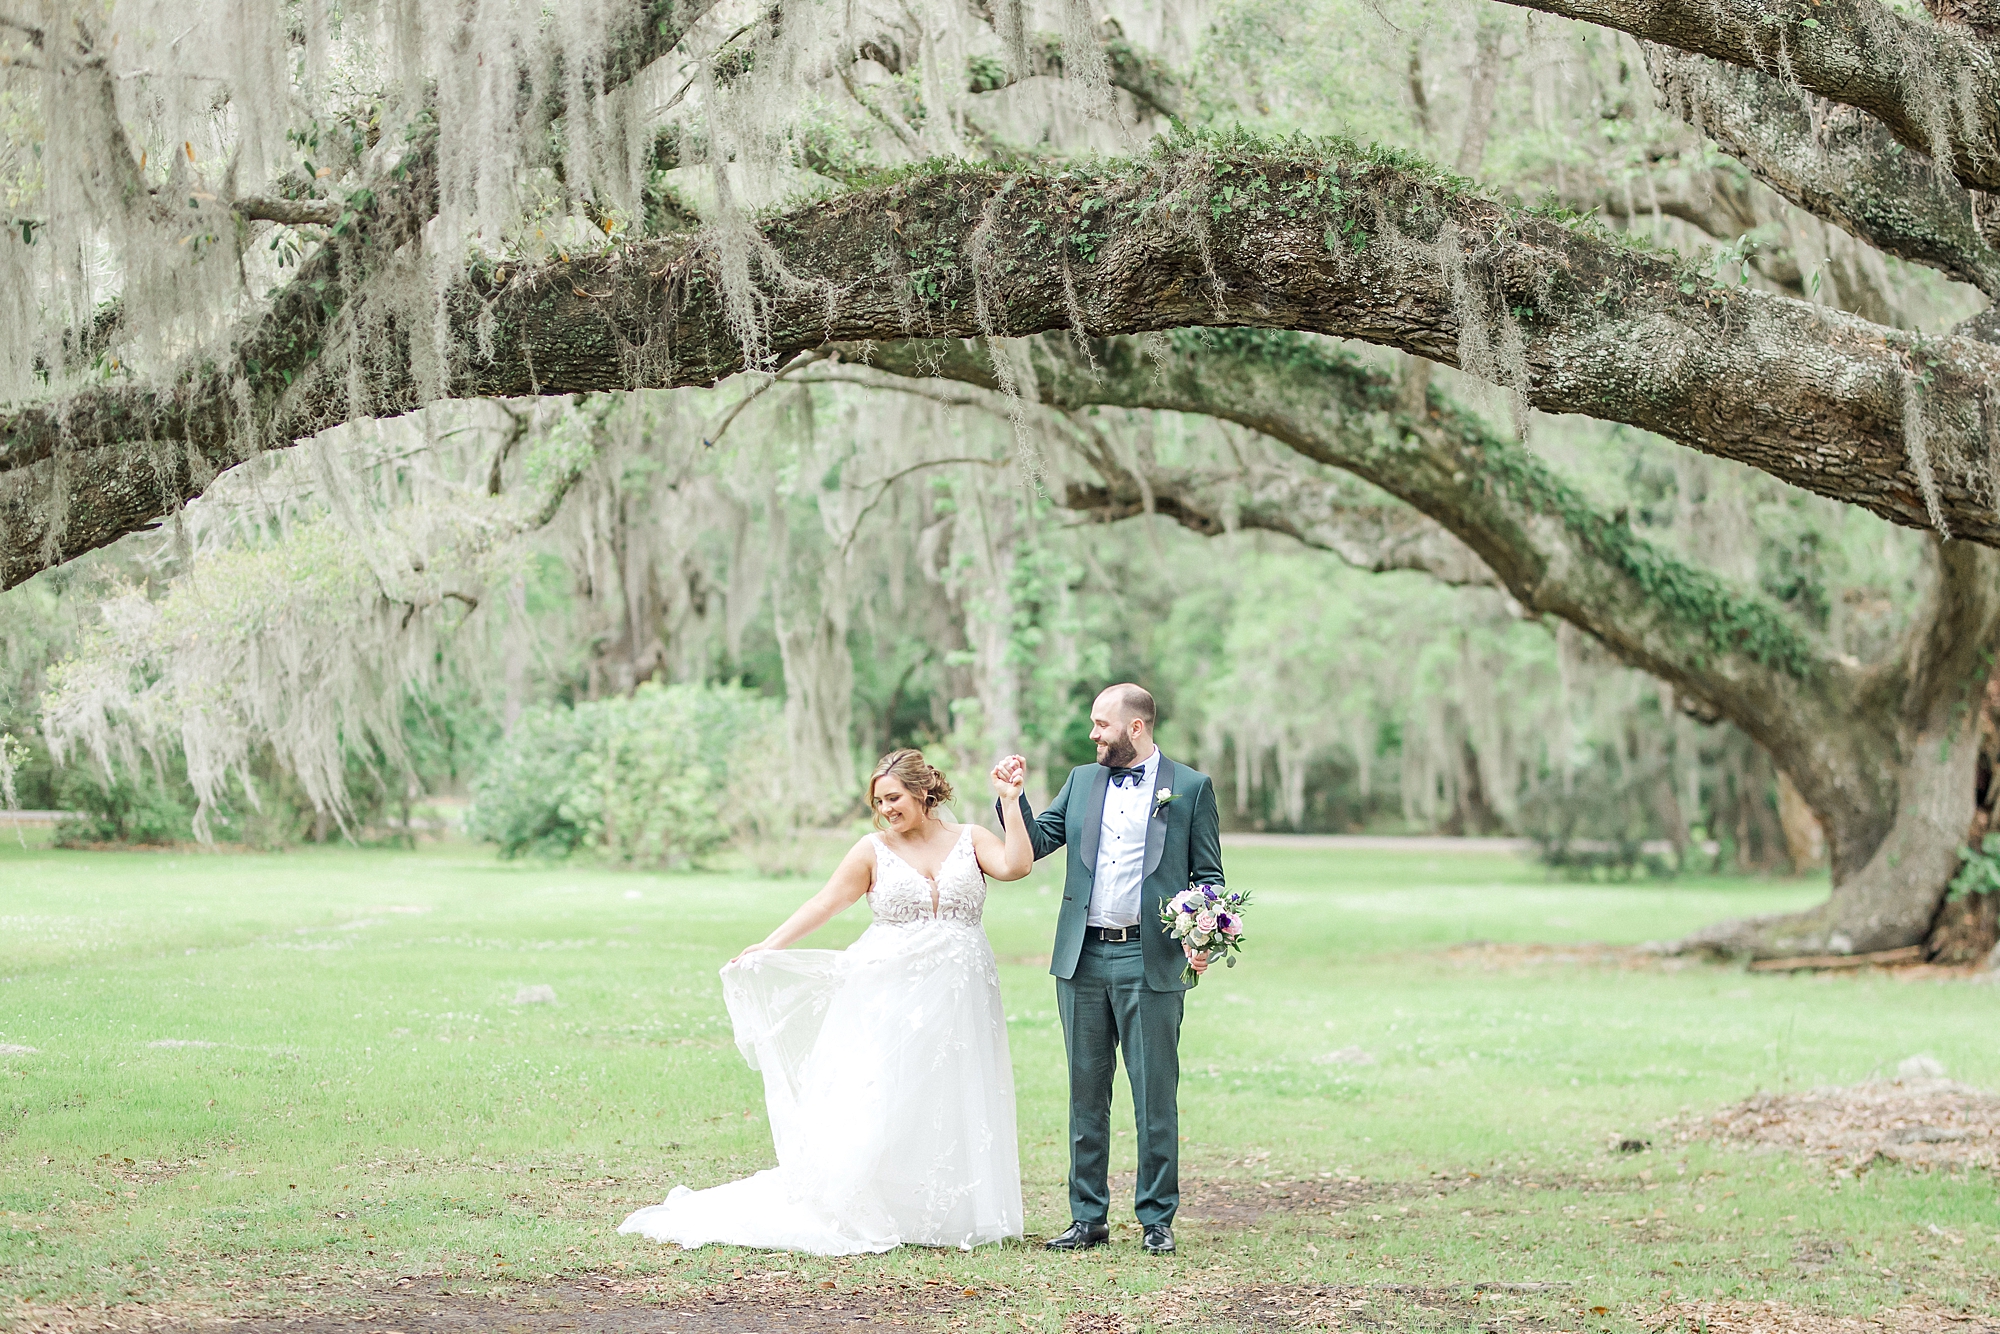 Charleston SC wedding photographer captures couple under spanish moss covered oak tree